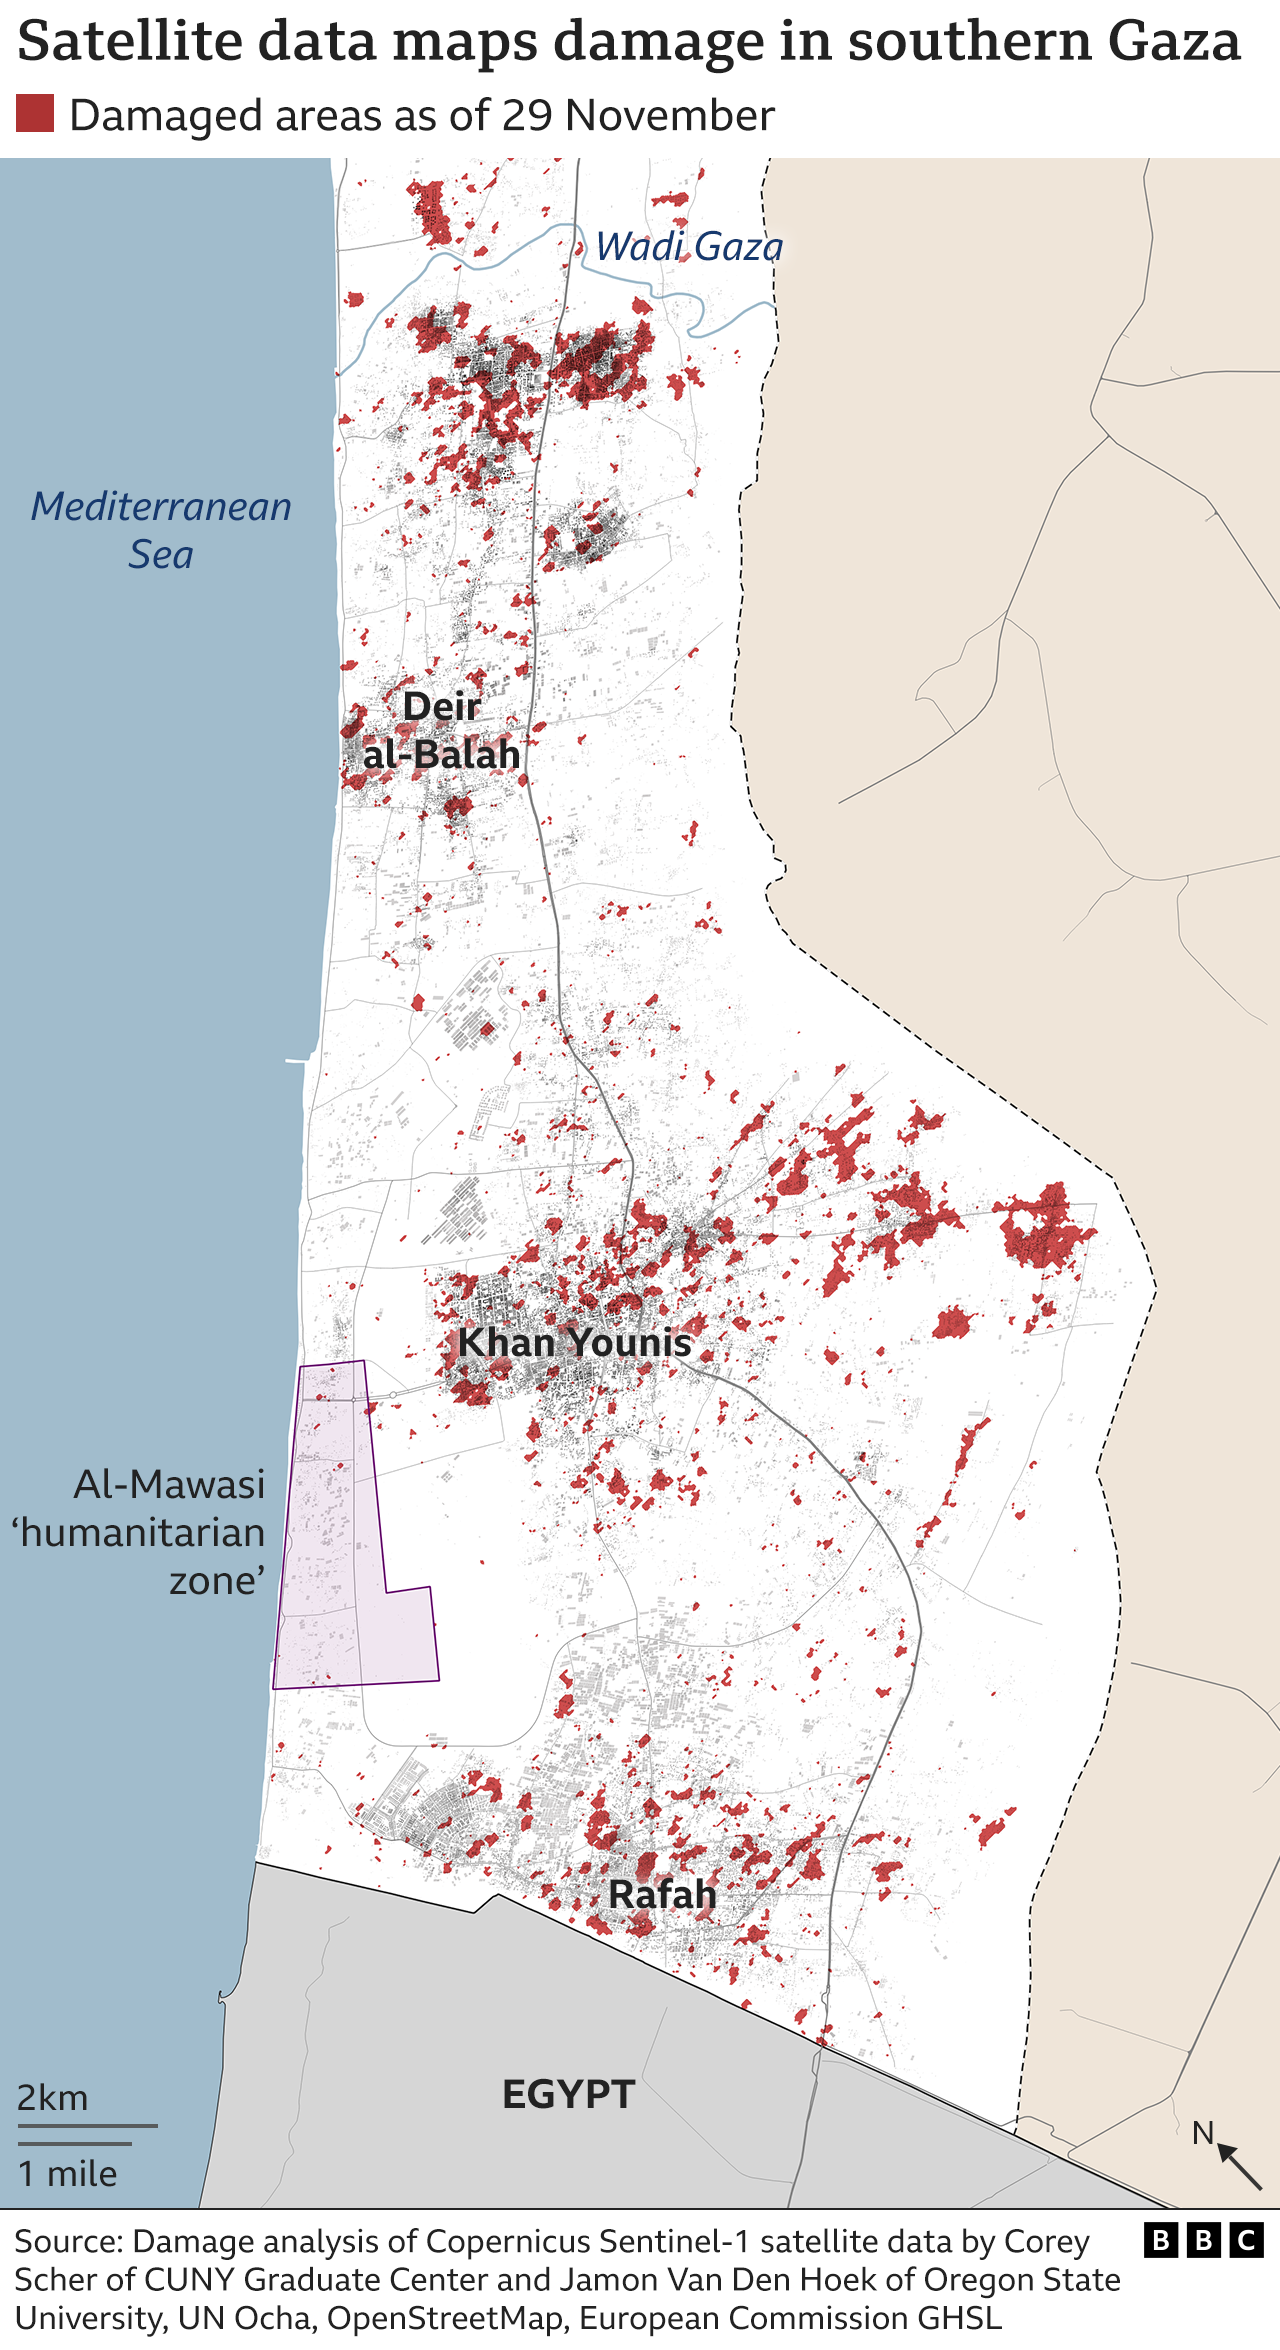 Map show damage for southern Gaza up to 29 November using satellite analysis